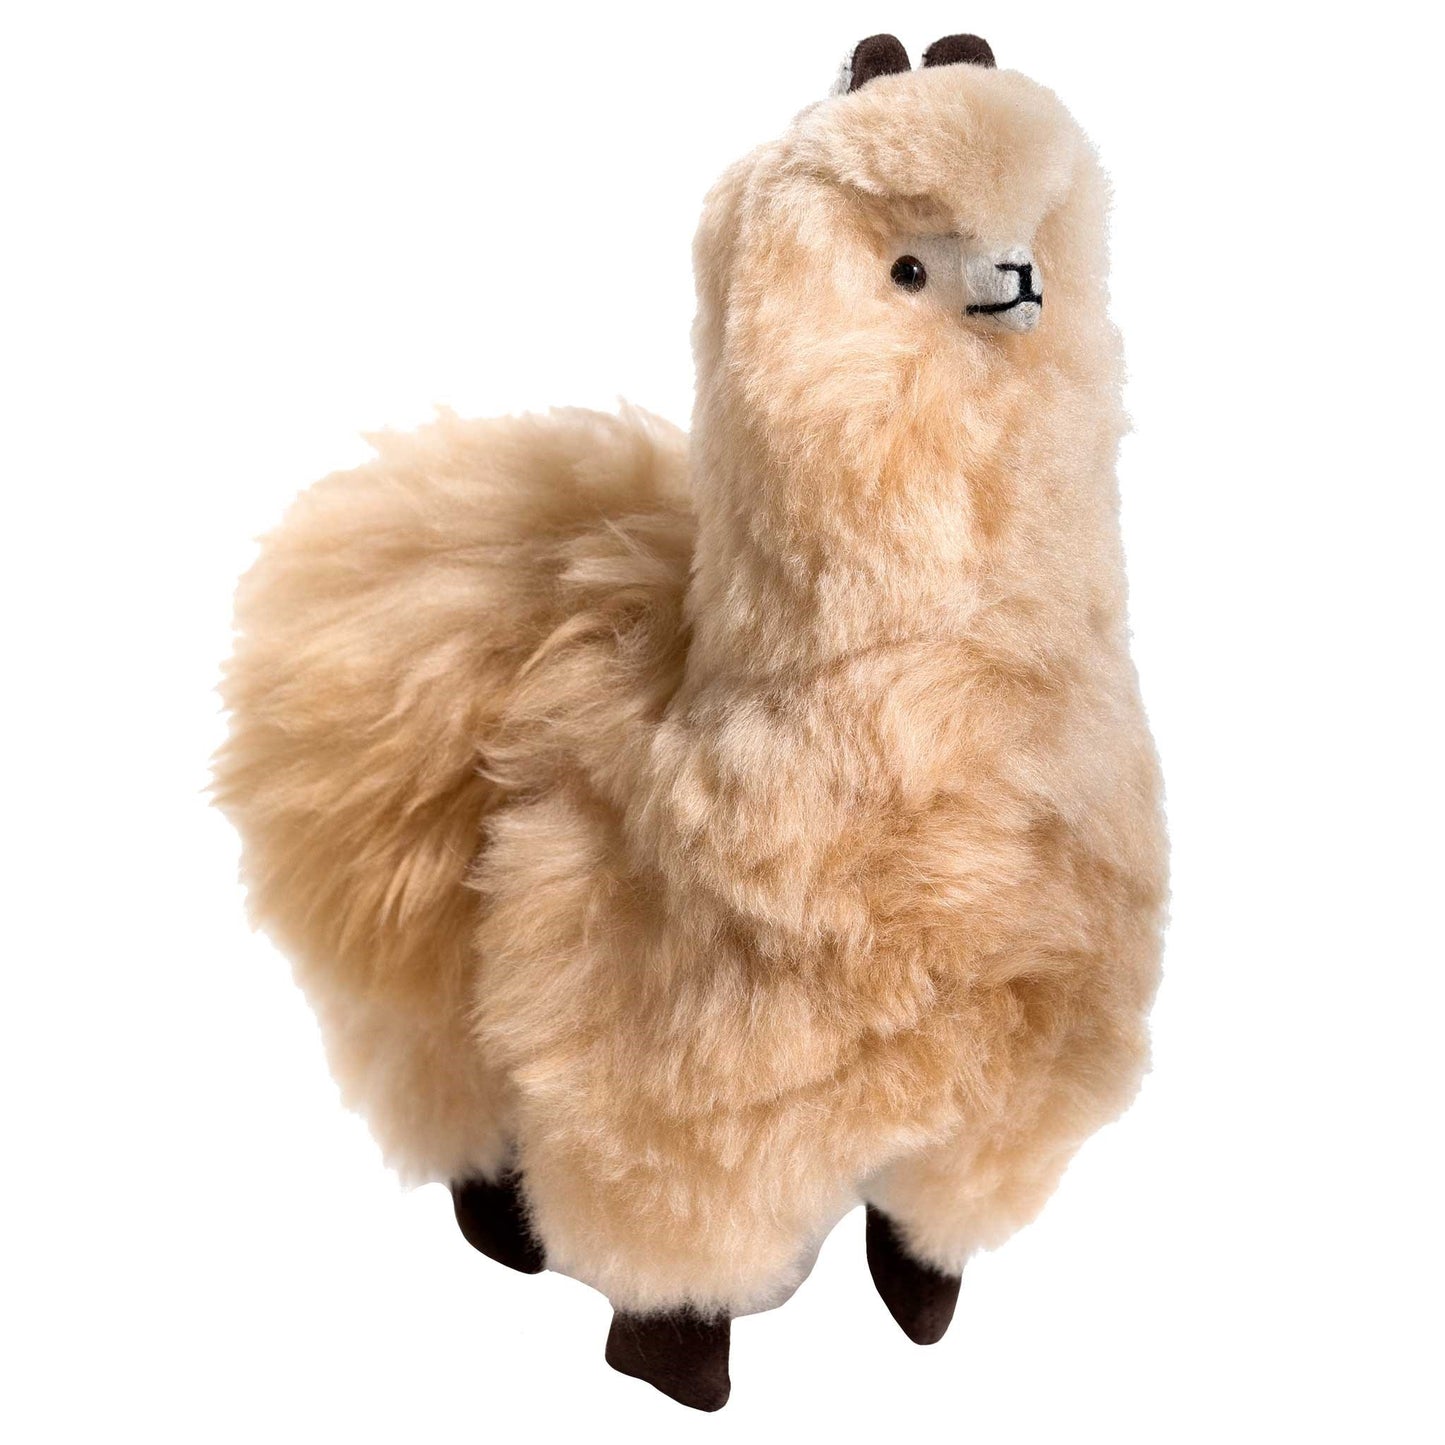 Alpaca Wool Stuffed Animals - 8.5" Alpaca